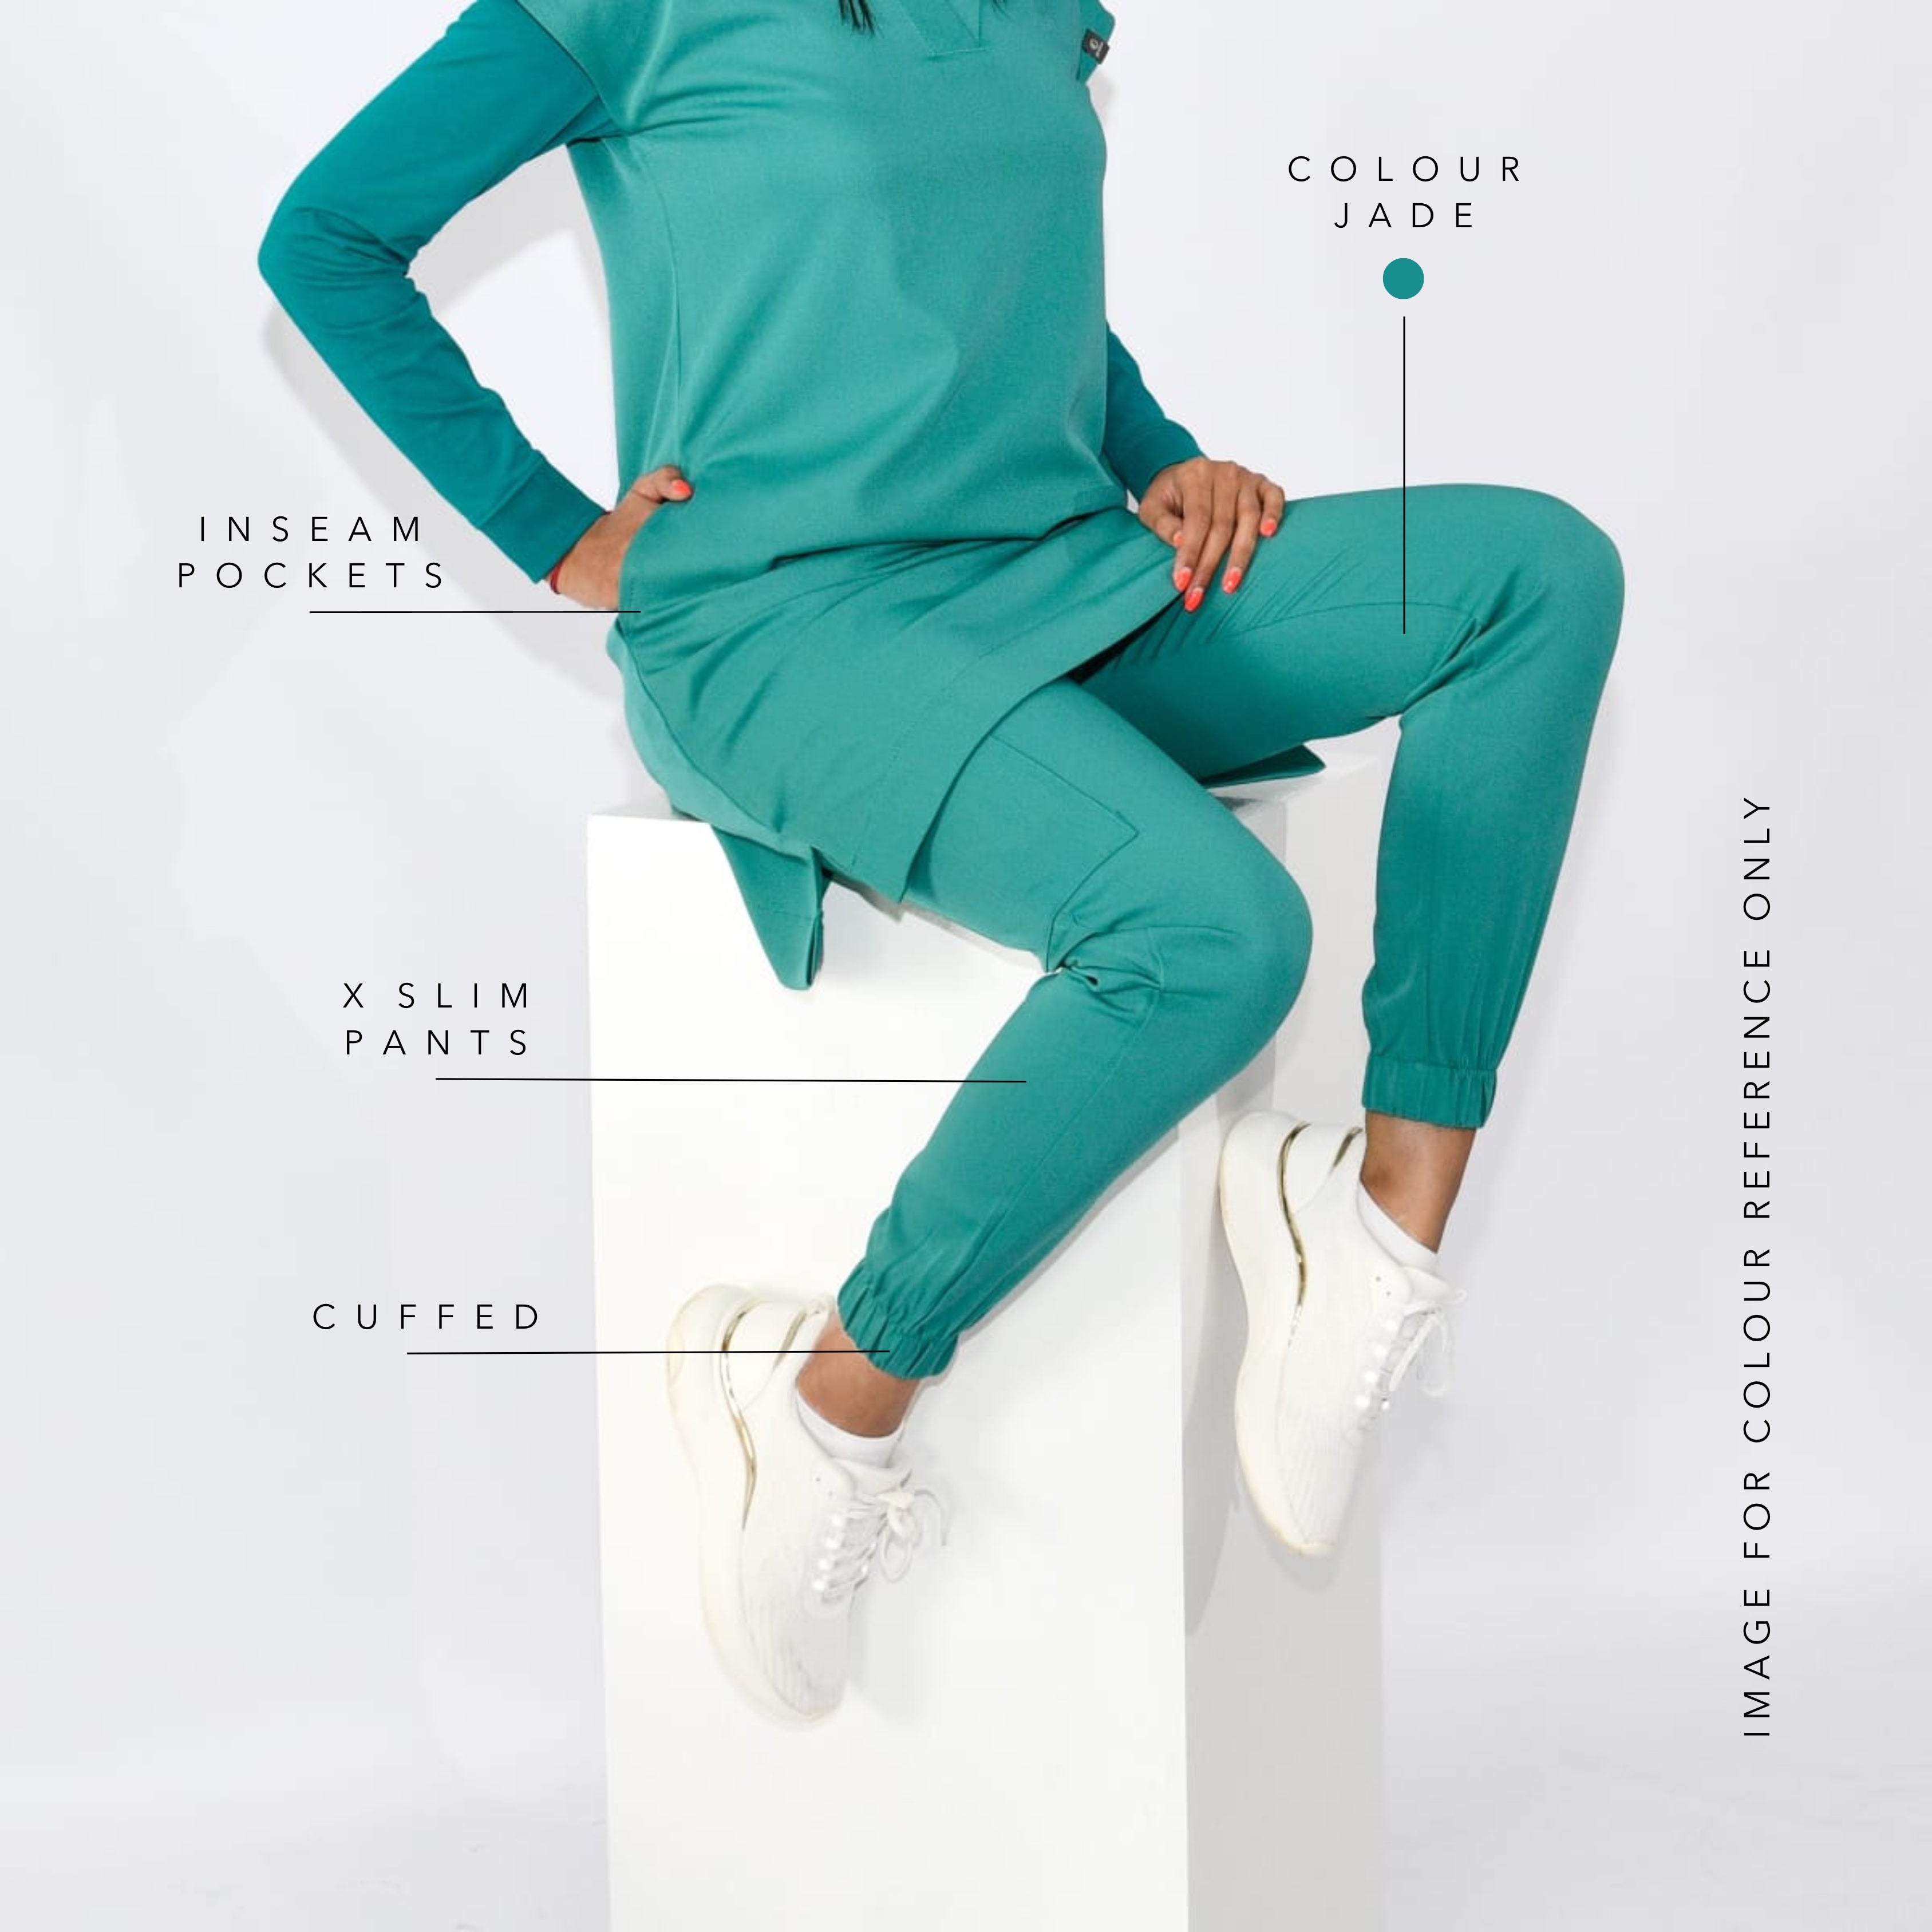 LADIES ACTIVE NALEDI DRESS - Greens Medi Scrubs South Africa - Premium Medical Uniforms & Apparel - Delivery Across SA 